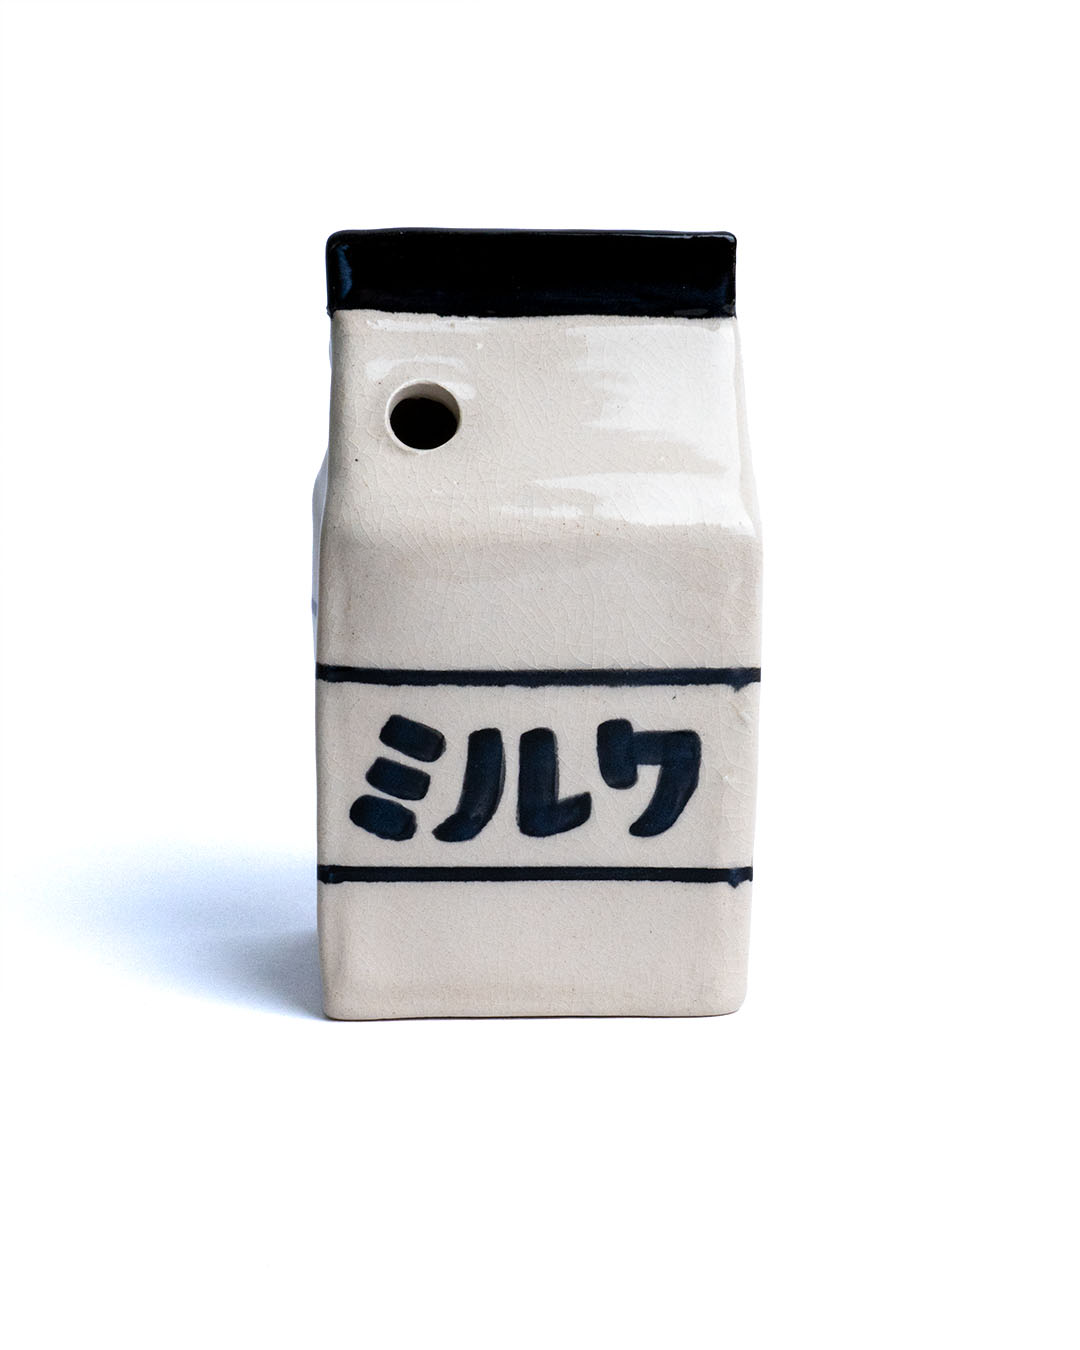 Kai x Milkbox Sticker for Sale by junsol